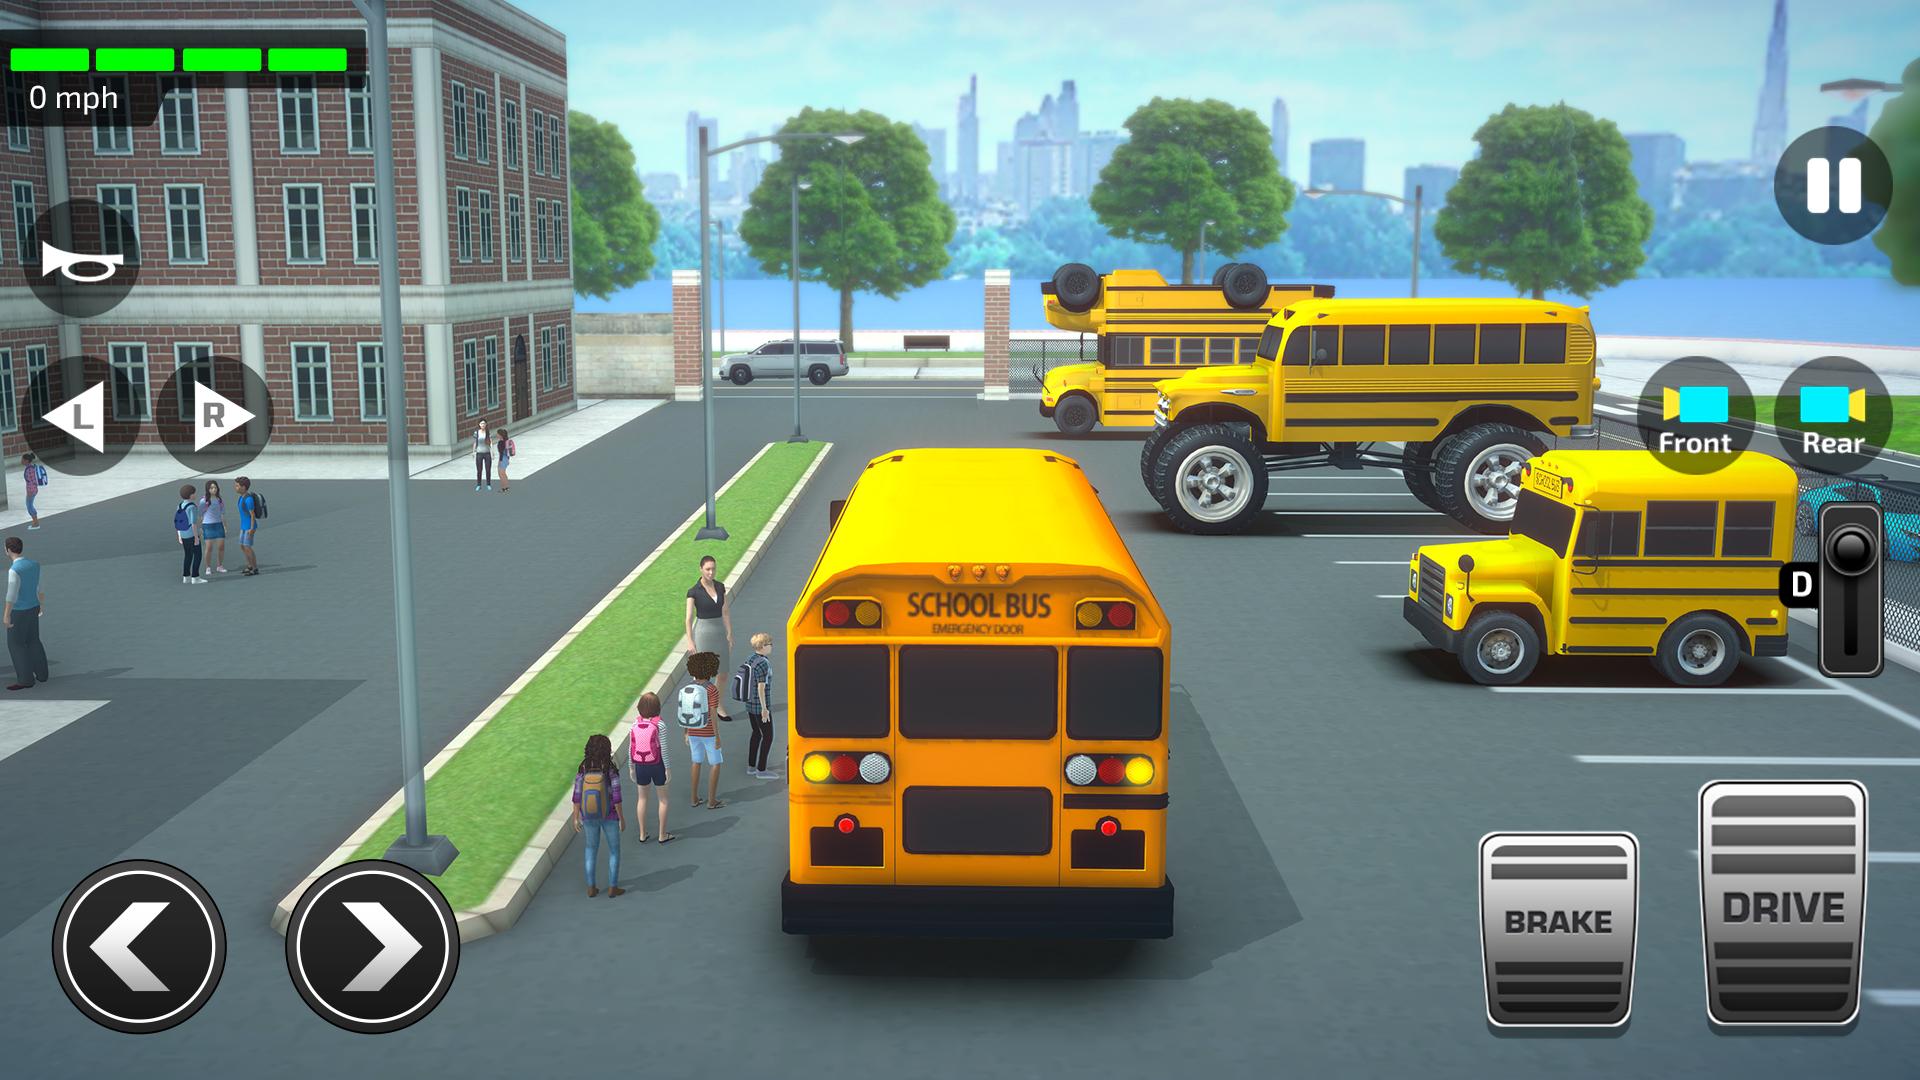 Super High School Bus Driving Simulator 3D - 2020 2.5 Screenshot 17